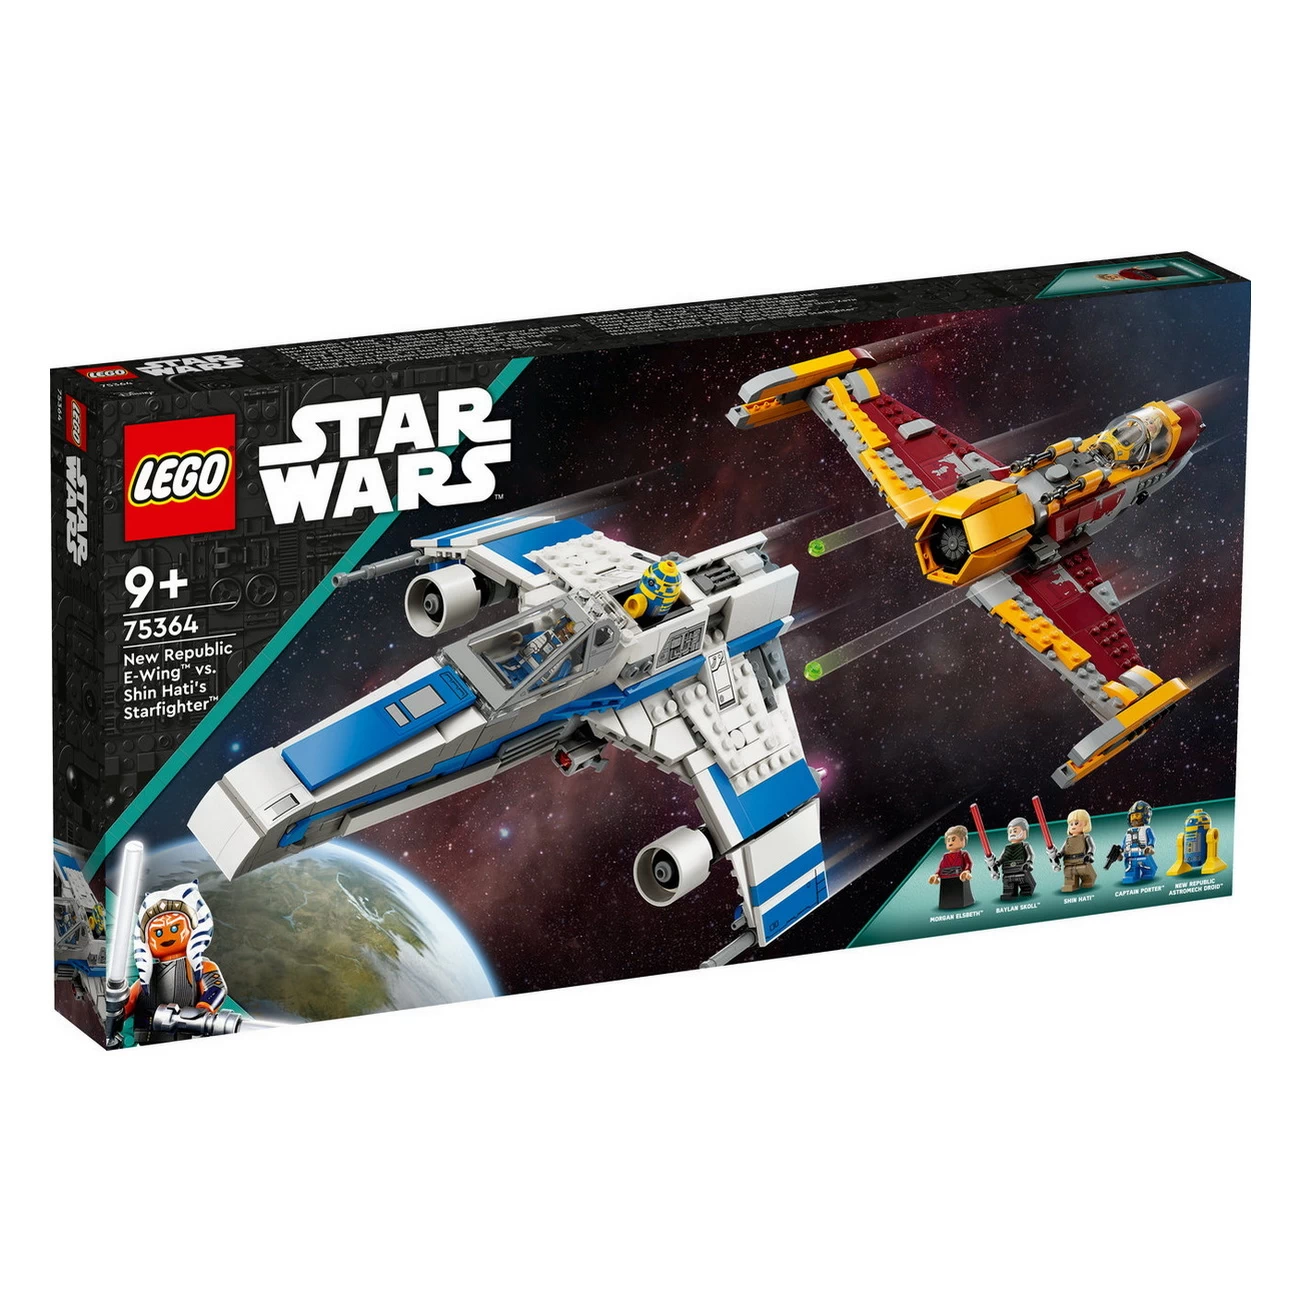 LEGO Star Wars 75364 - New Republic E-Wing vs Shin Hatis Starfighter